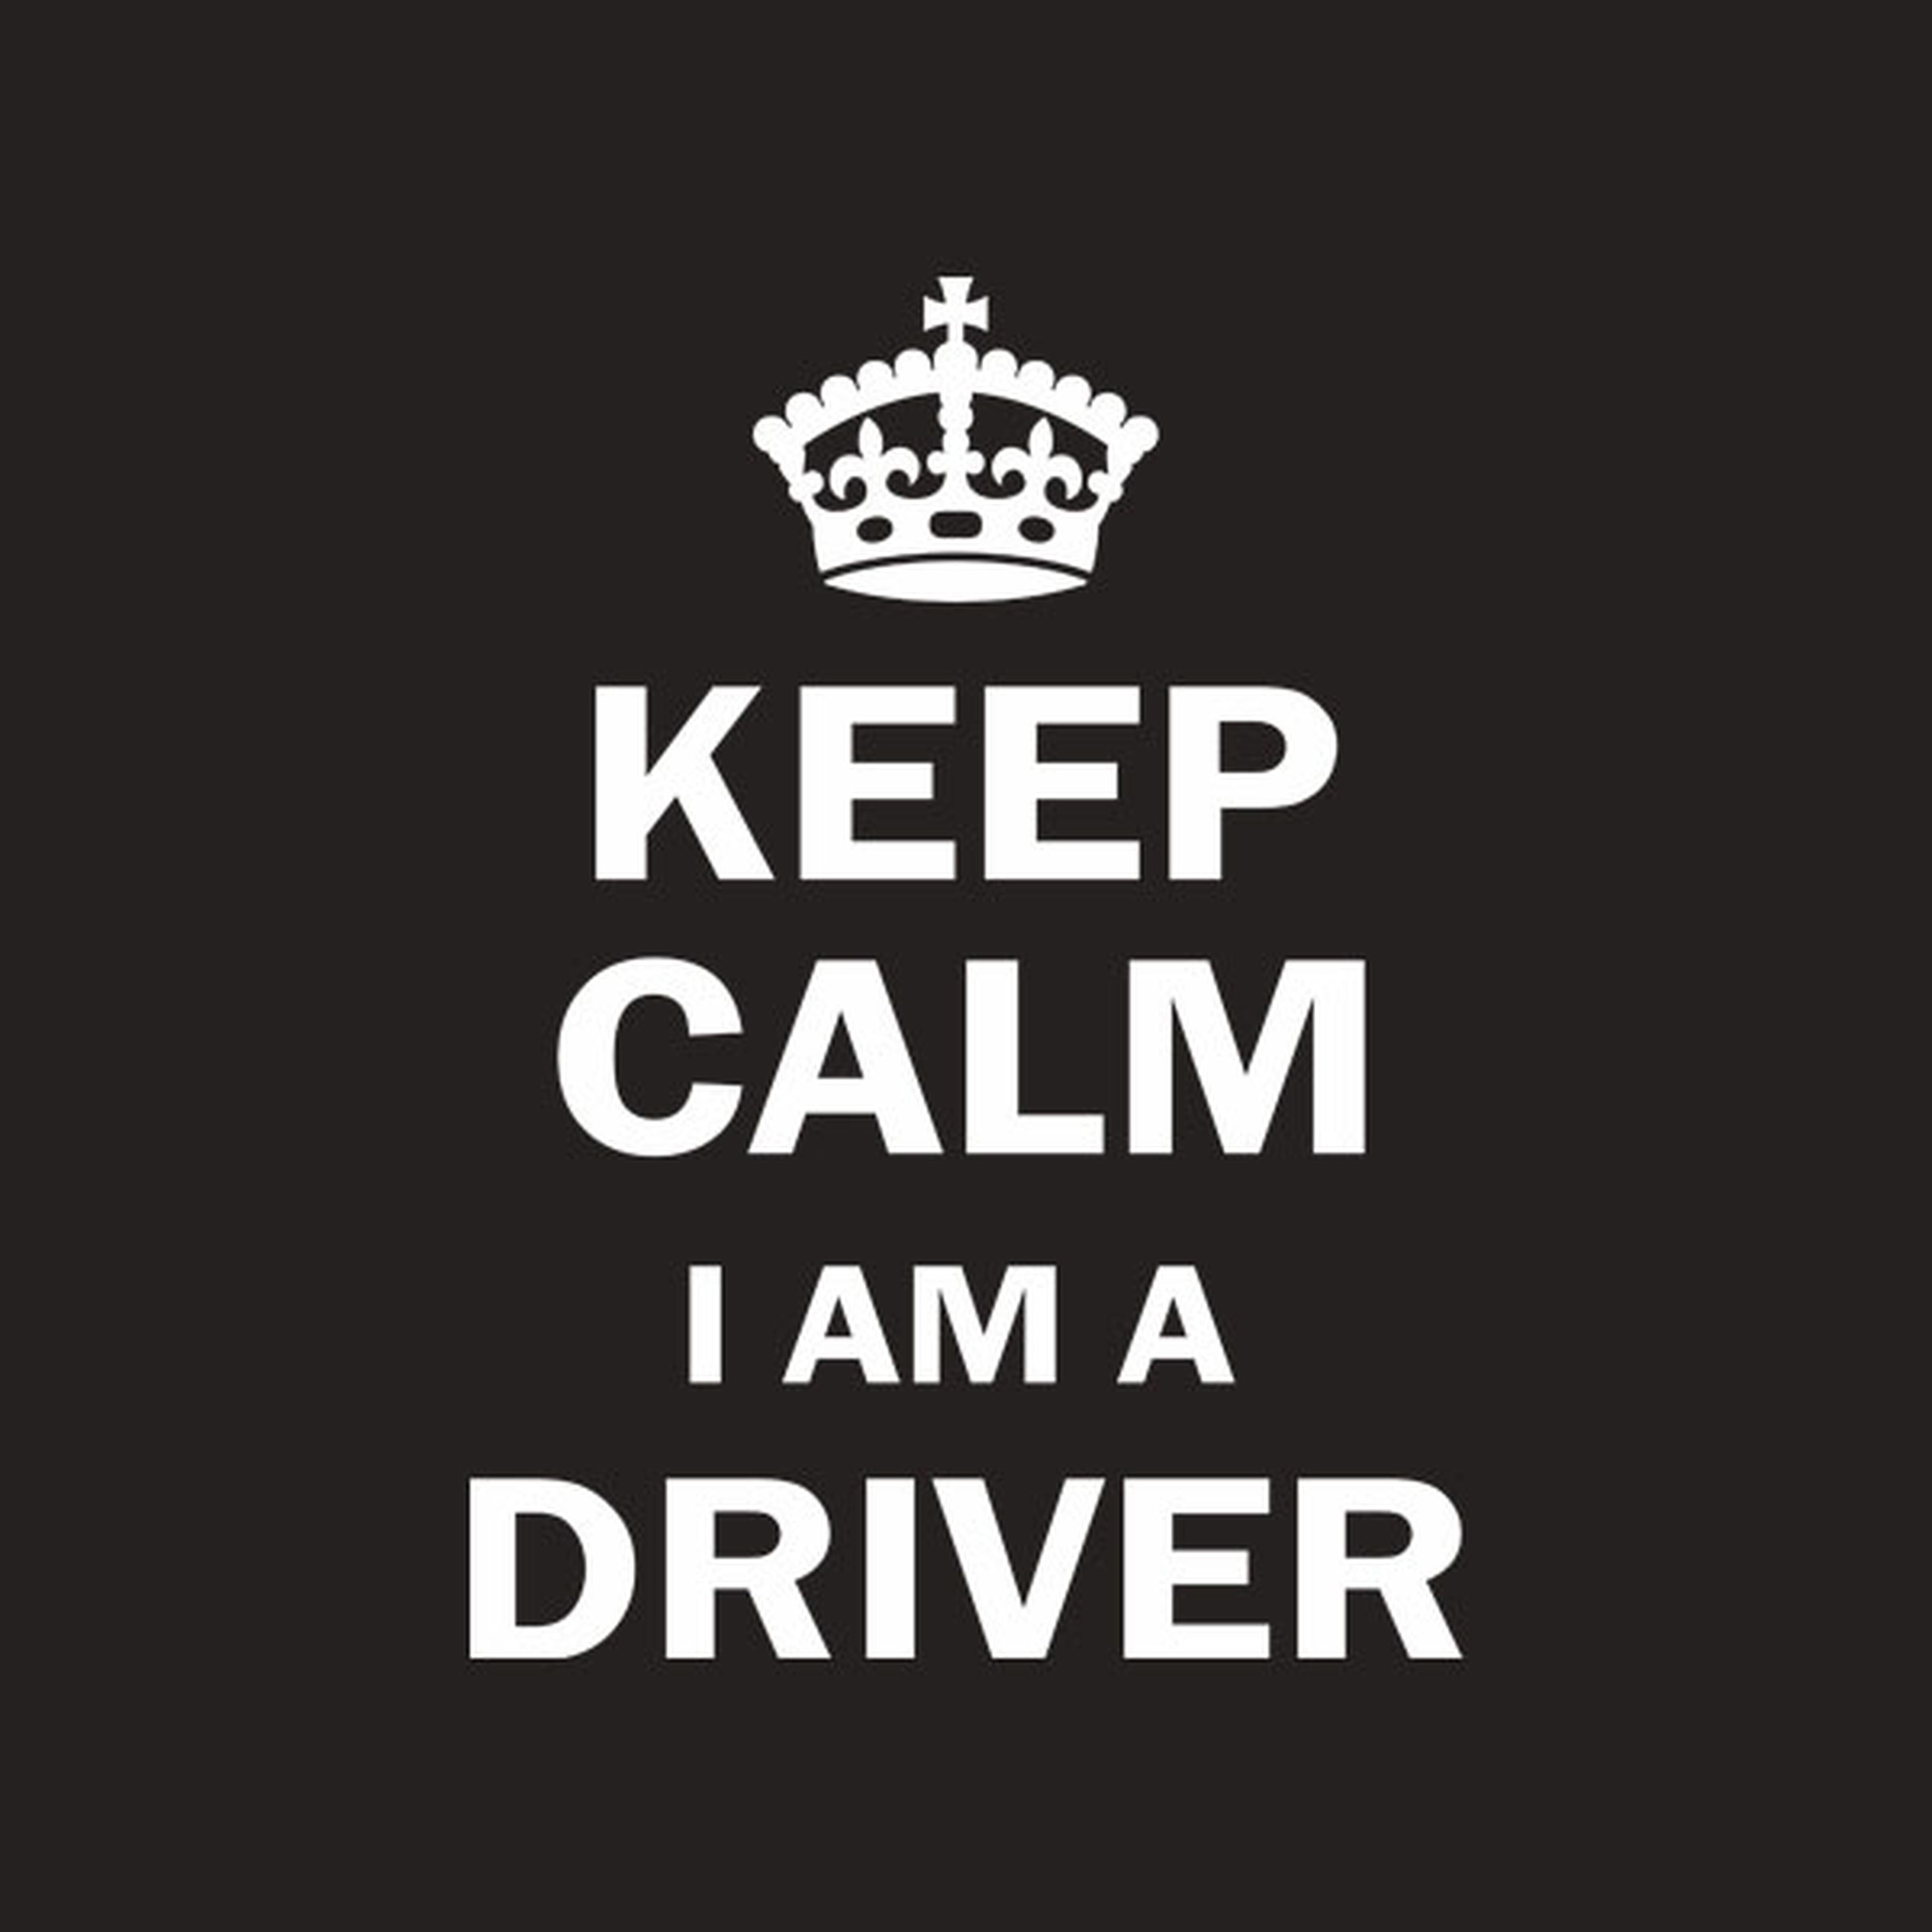 Keep calm. I am a driver T-shirt